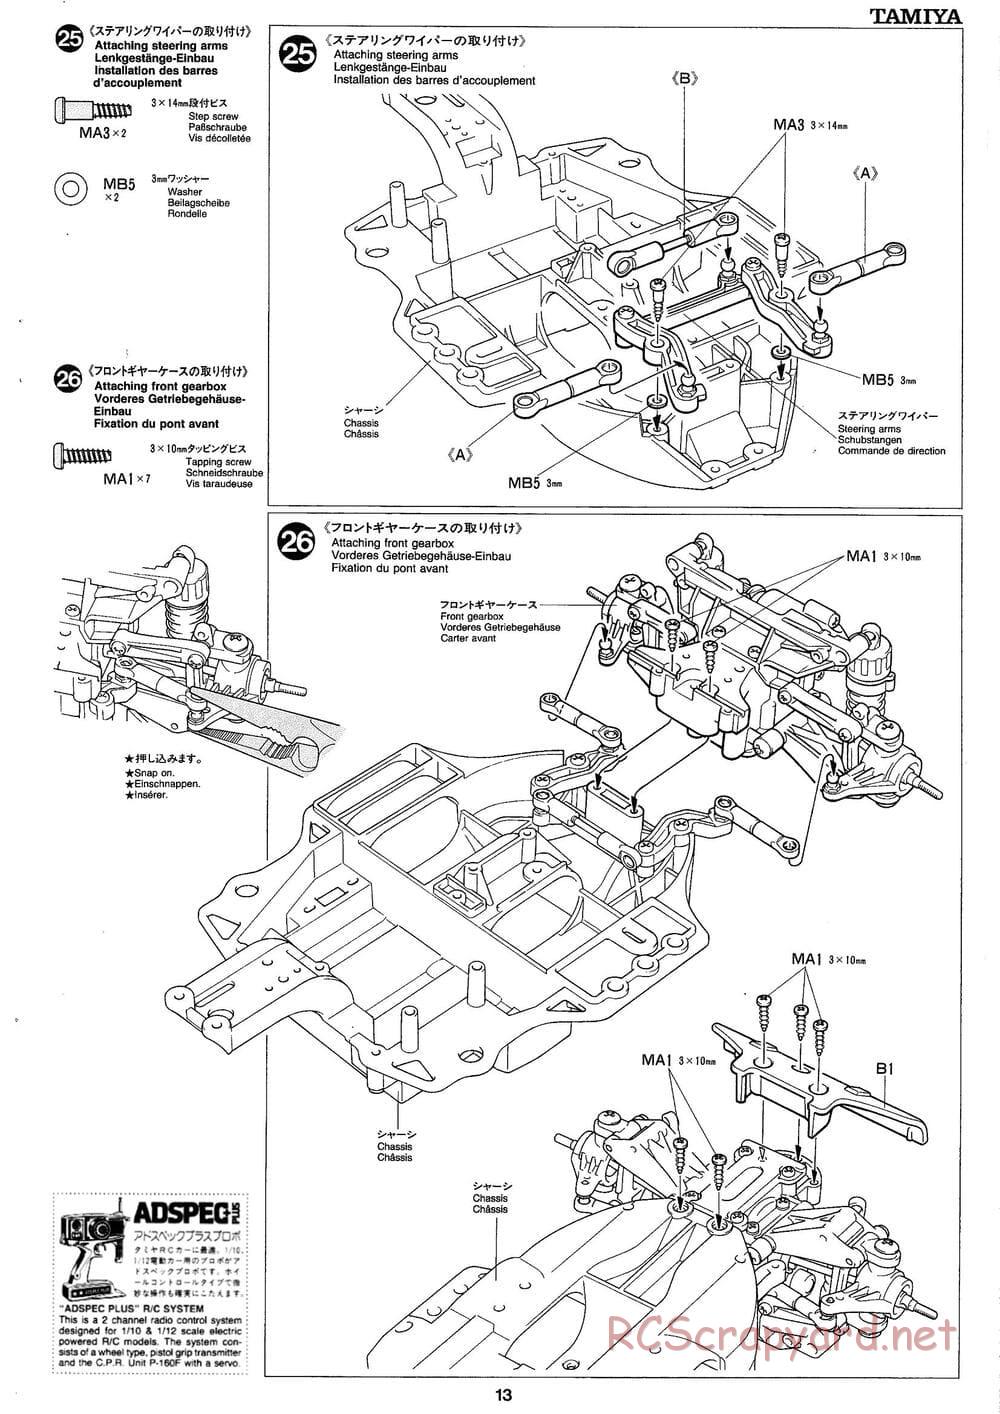 Tamiya - Mobil 1 NSX - TA-03R Chassis - Manual - Page 13